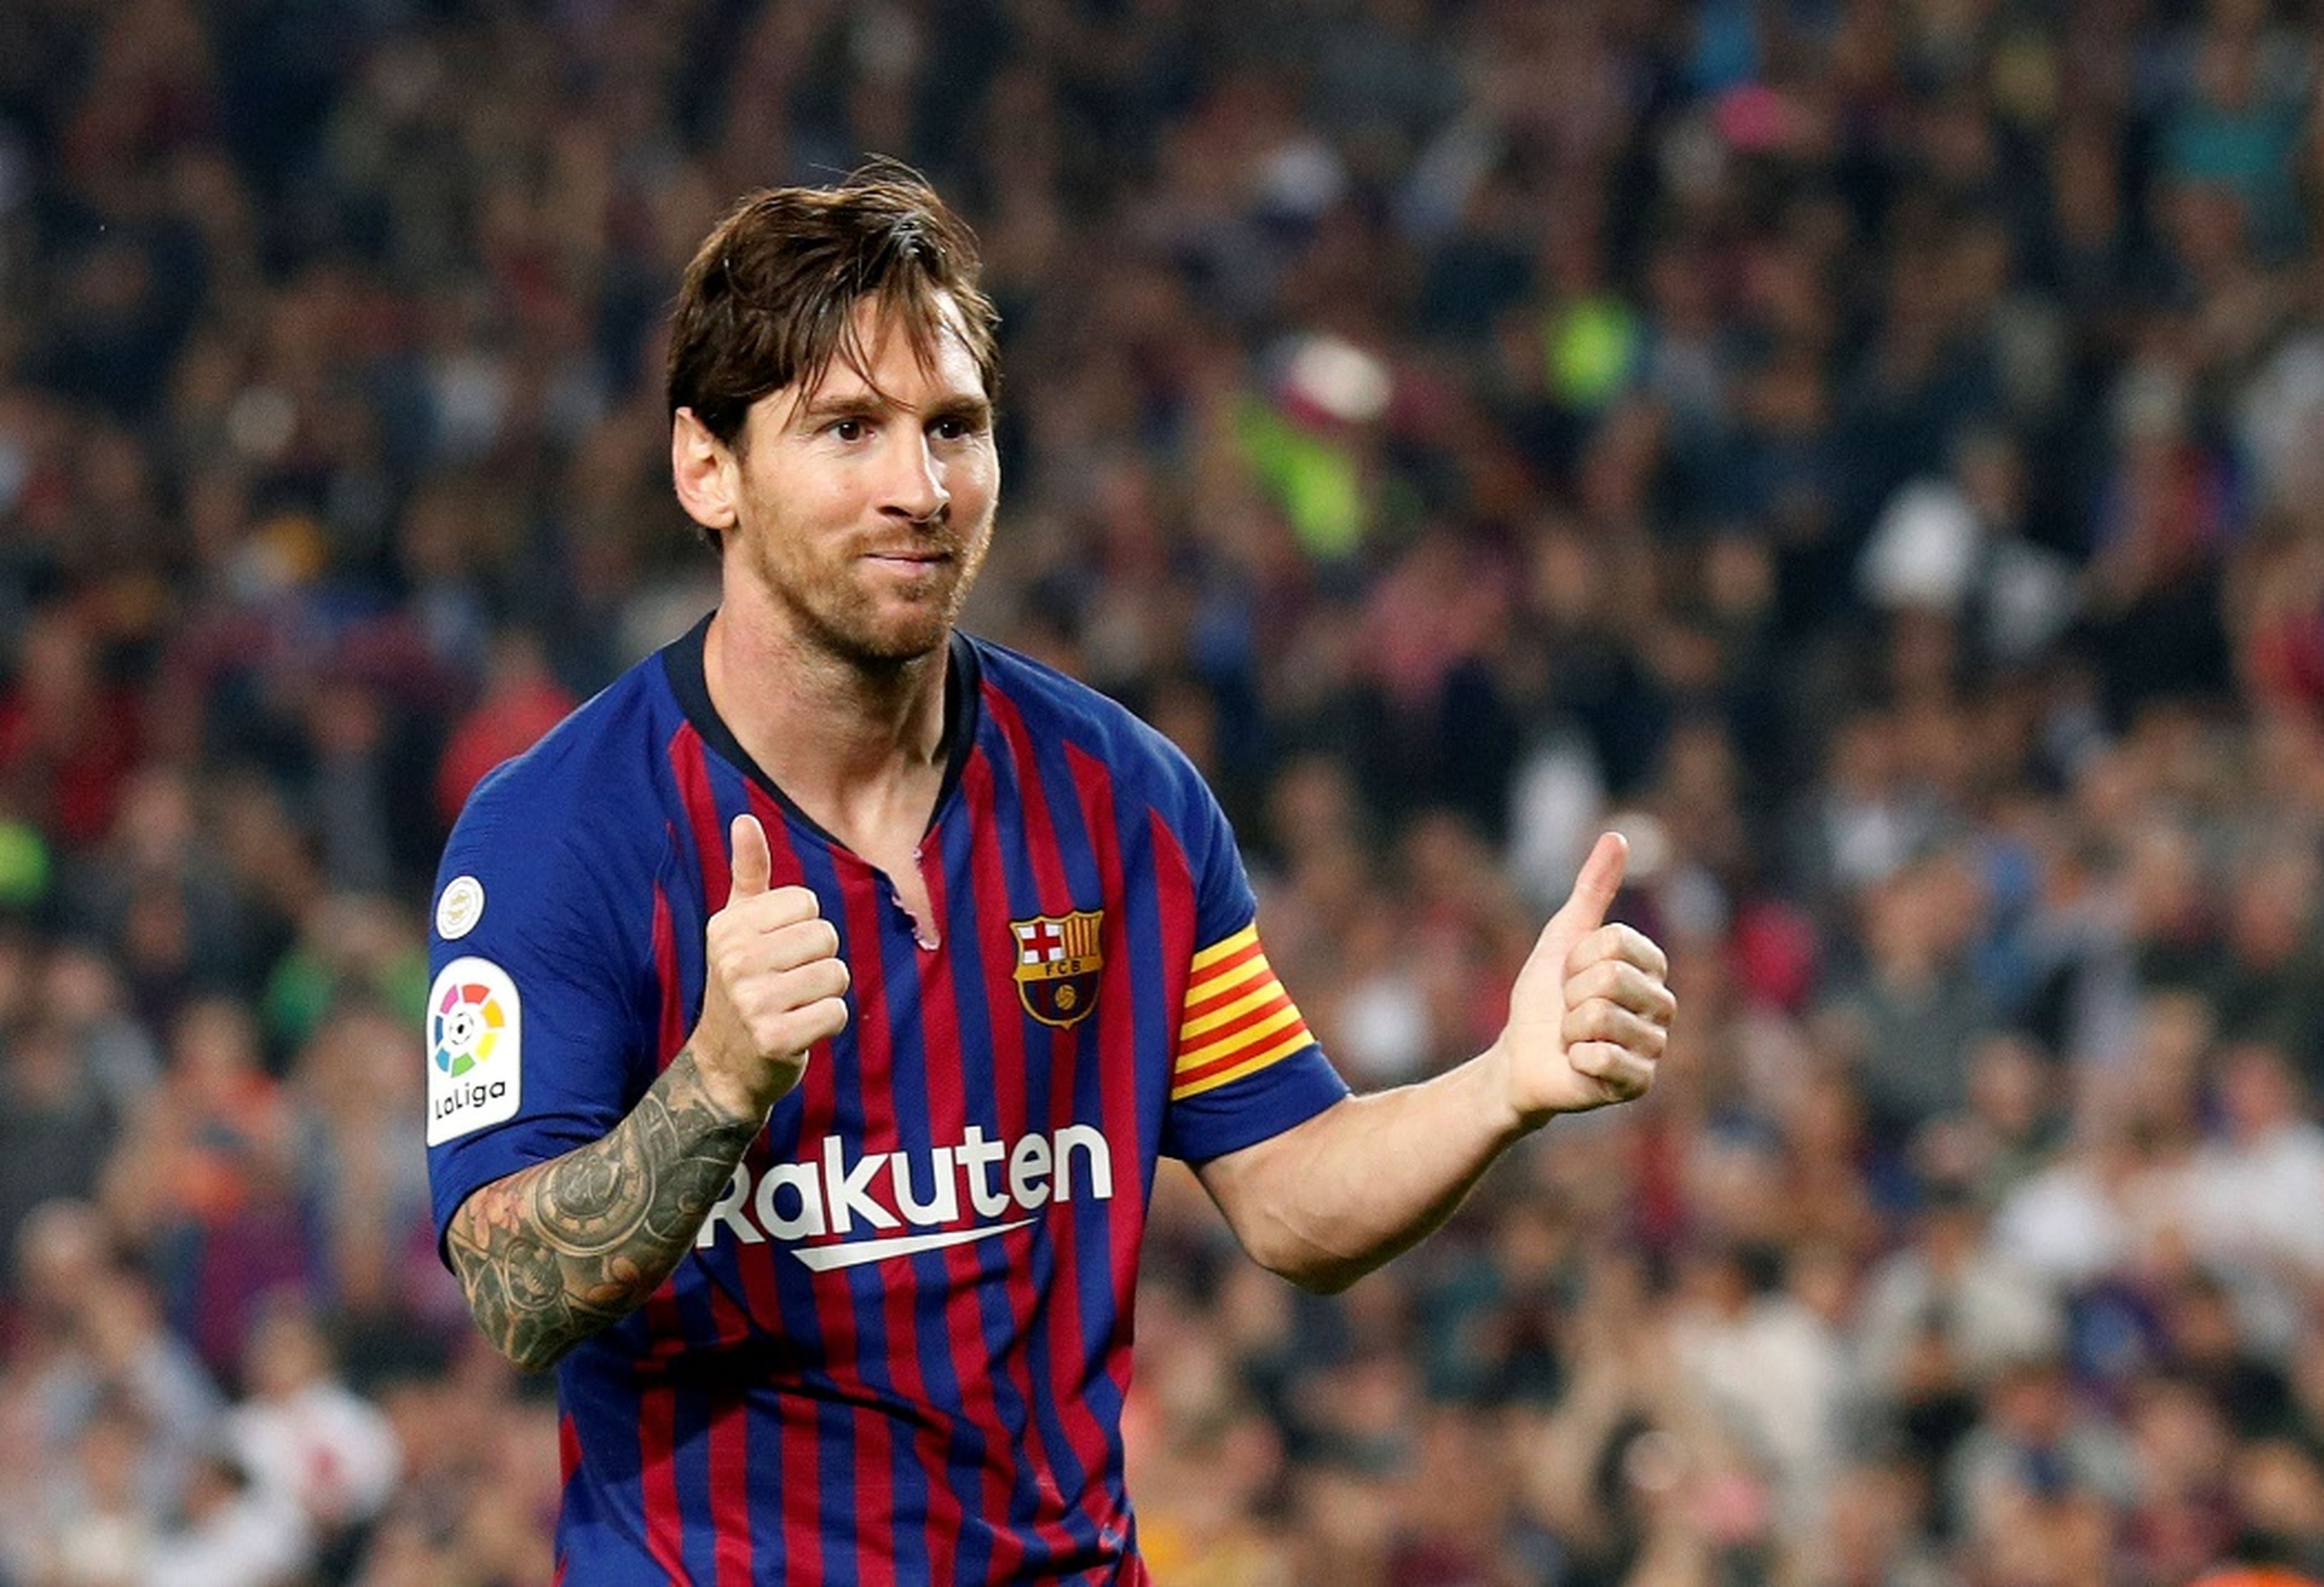 Messi celebra un gol en el partido del FC Barcelona contra el Sevilla en el Camp Nou, el 20 de octubre de 2018.